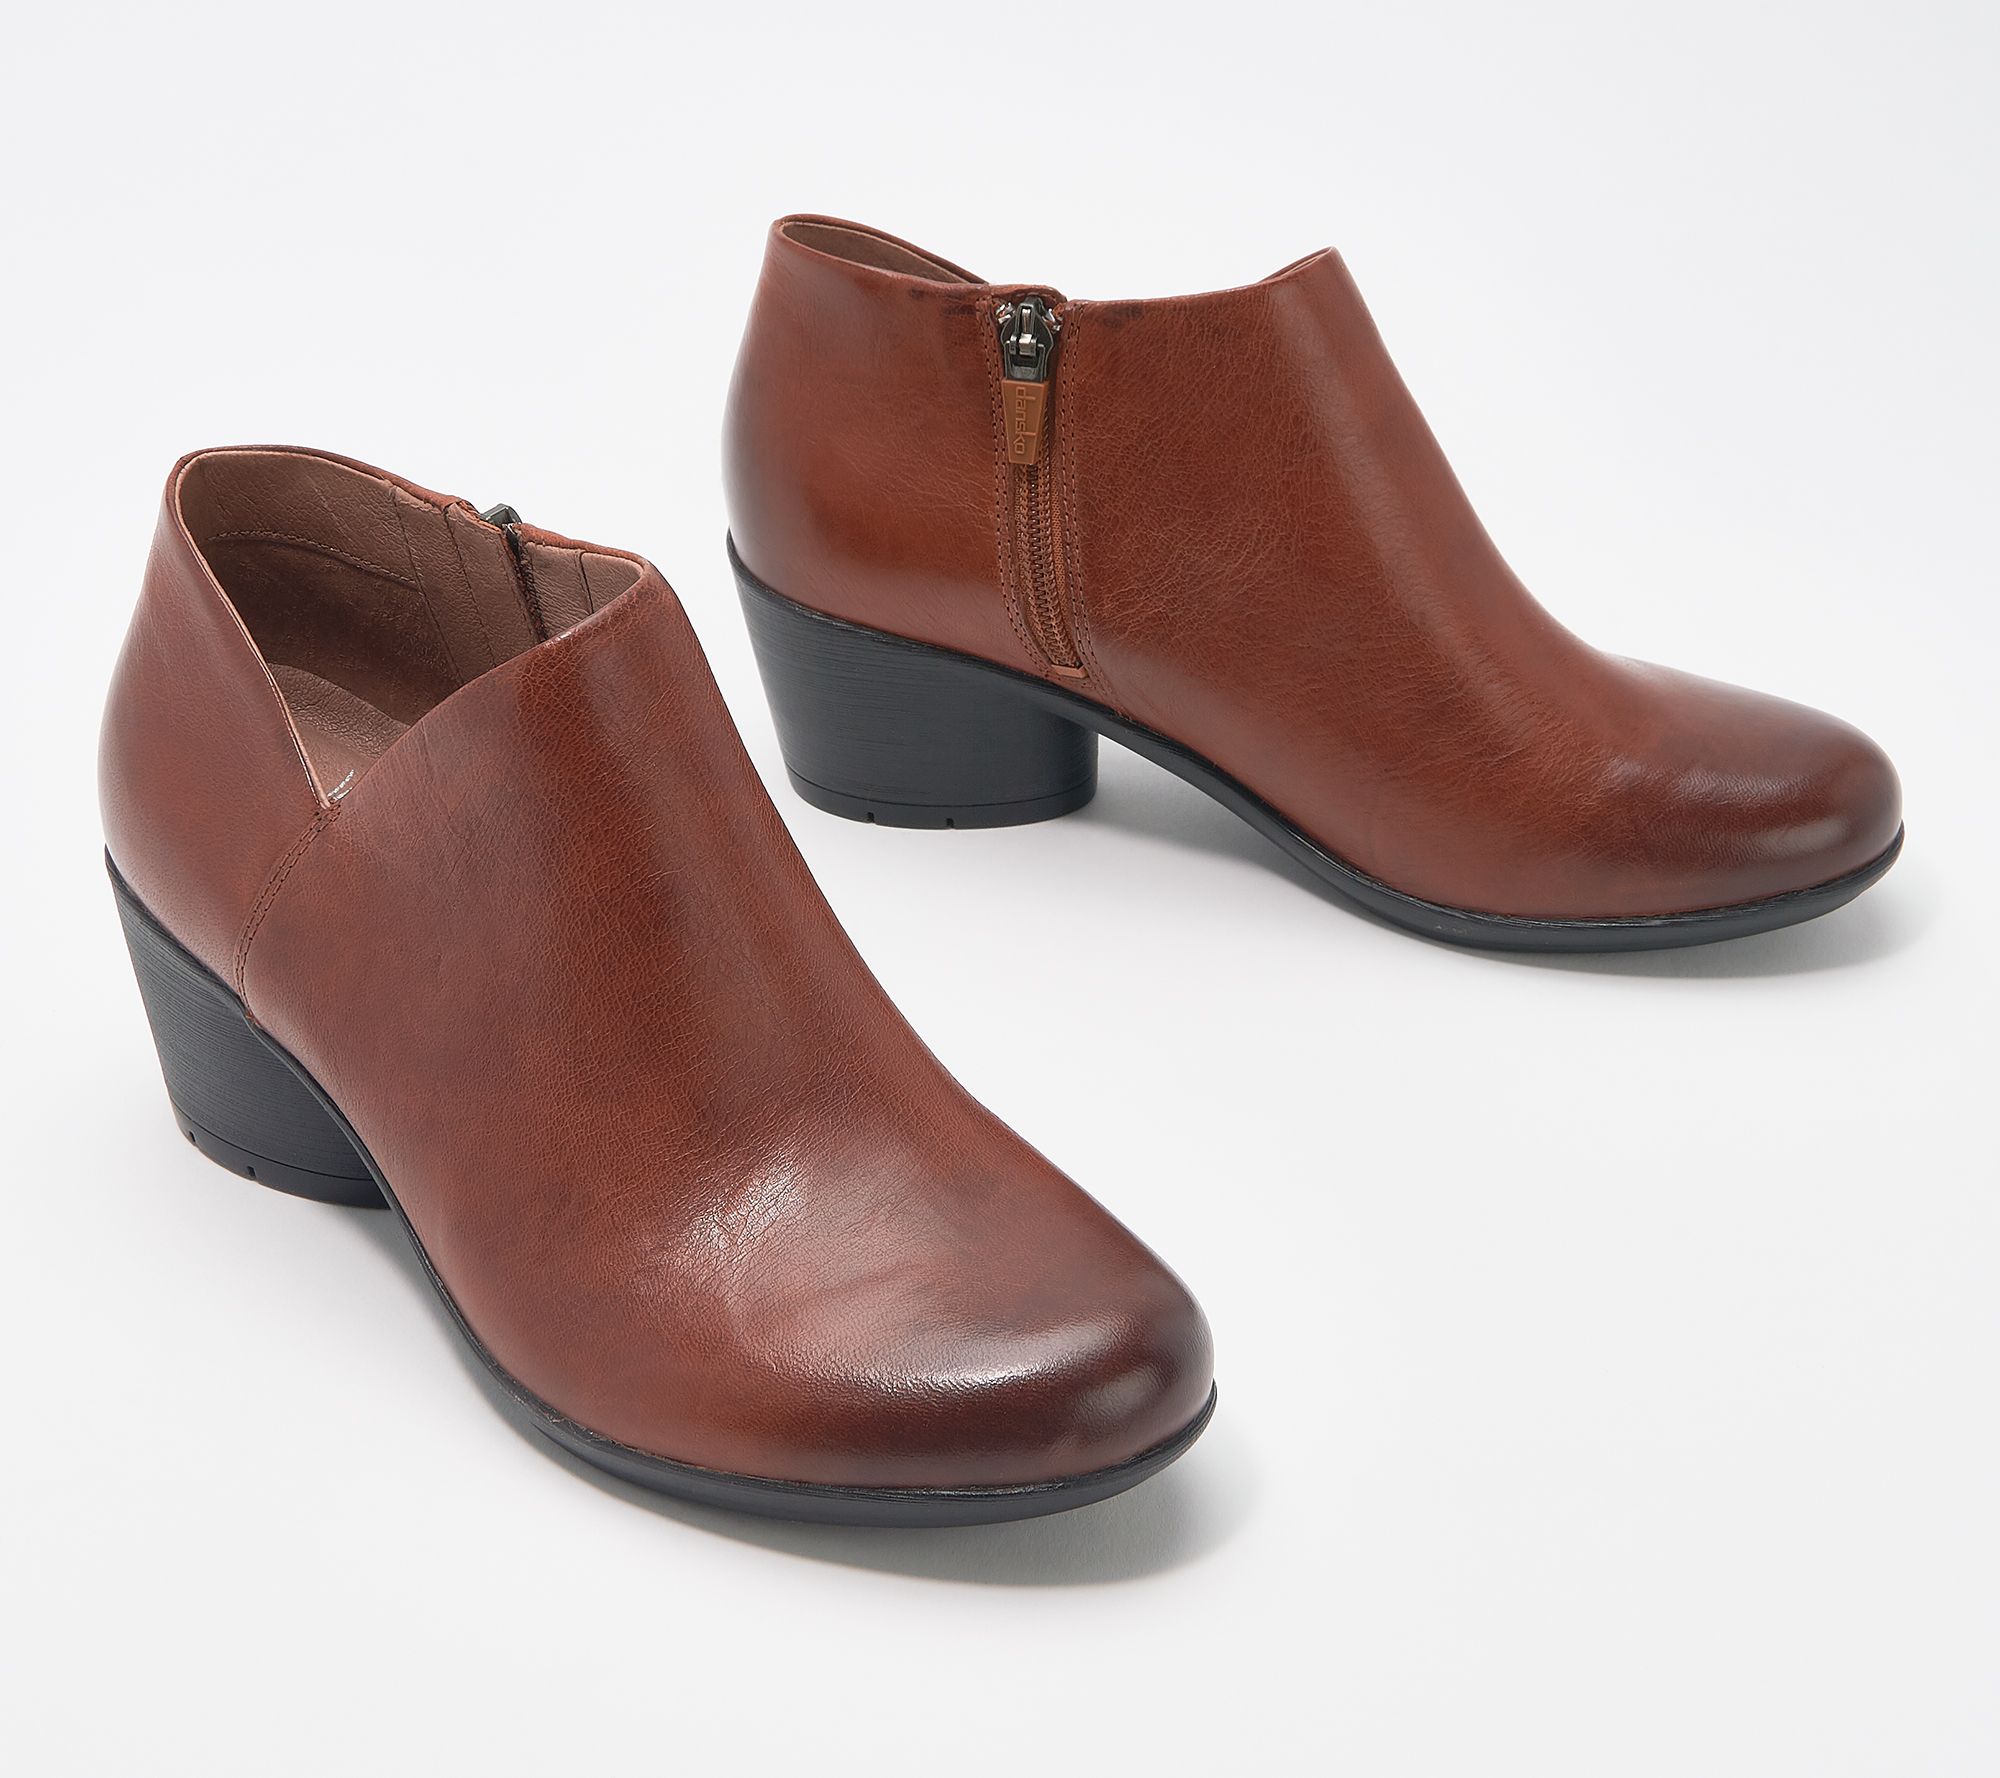 Dansko Burnished Leather Ankle Boots 